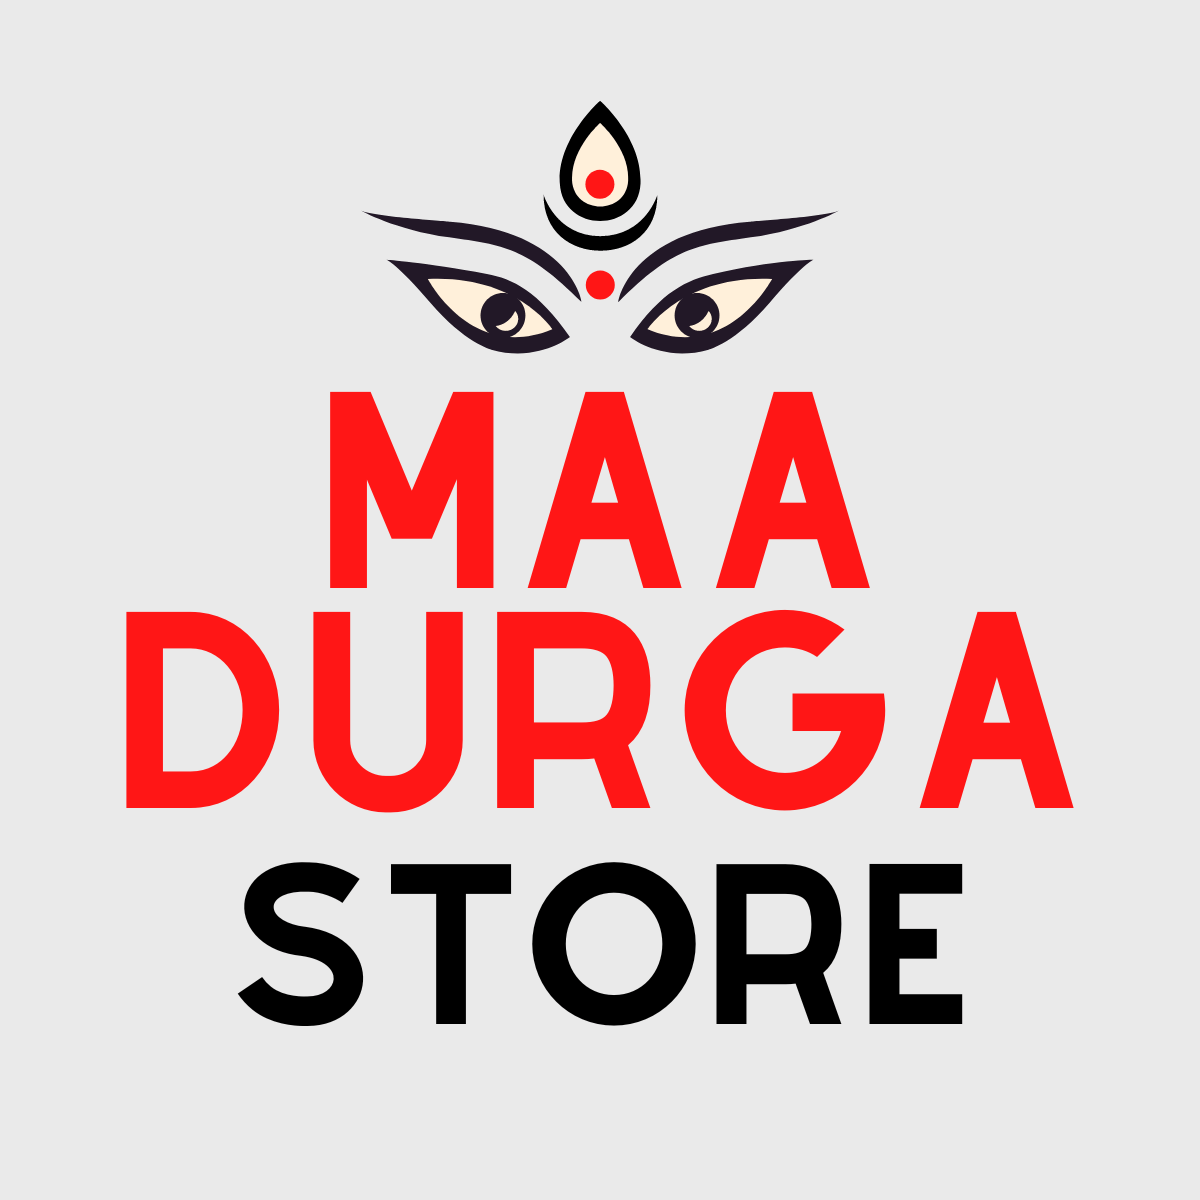 Maa Durga Store